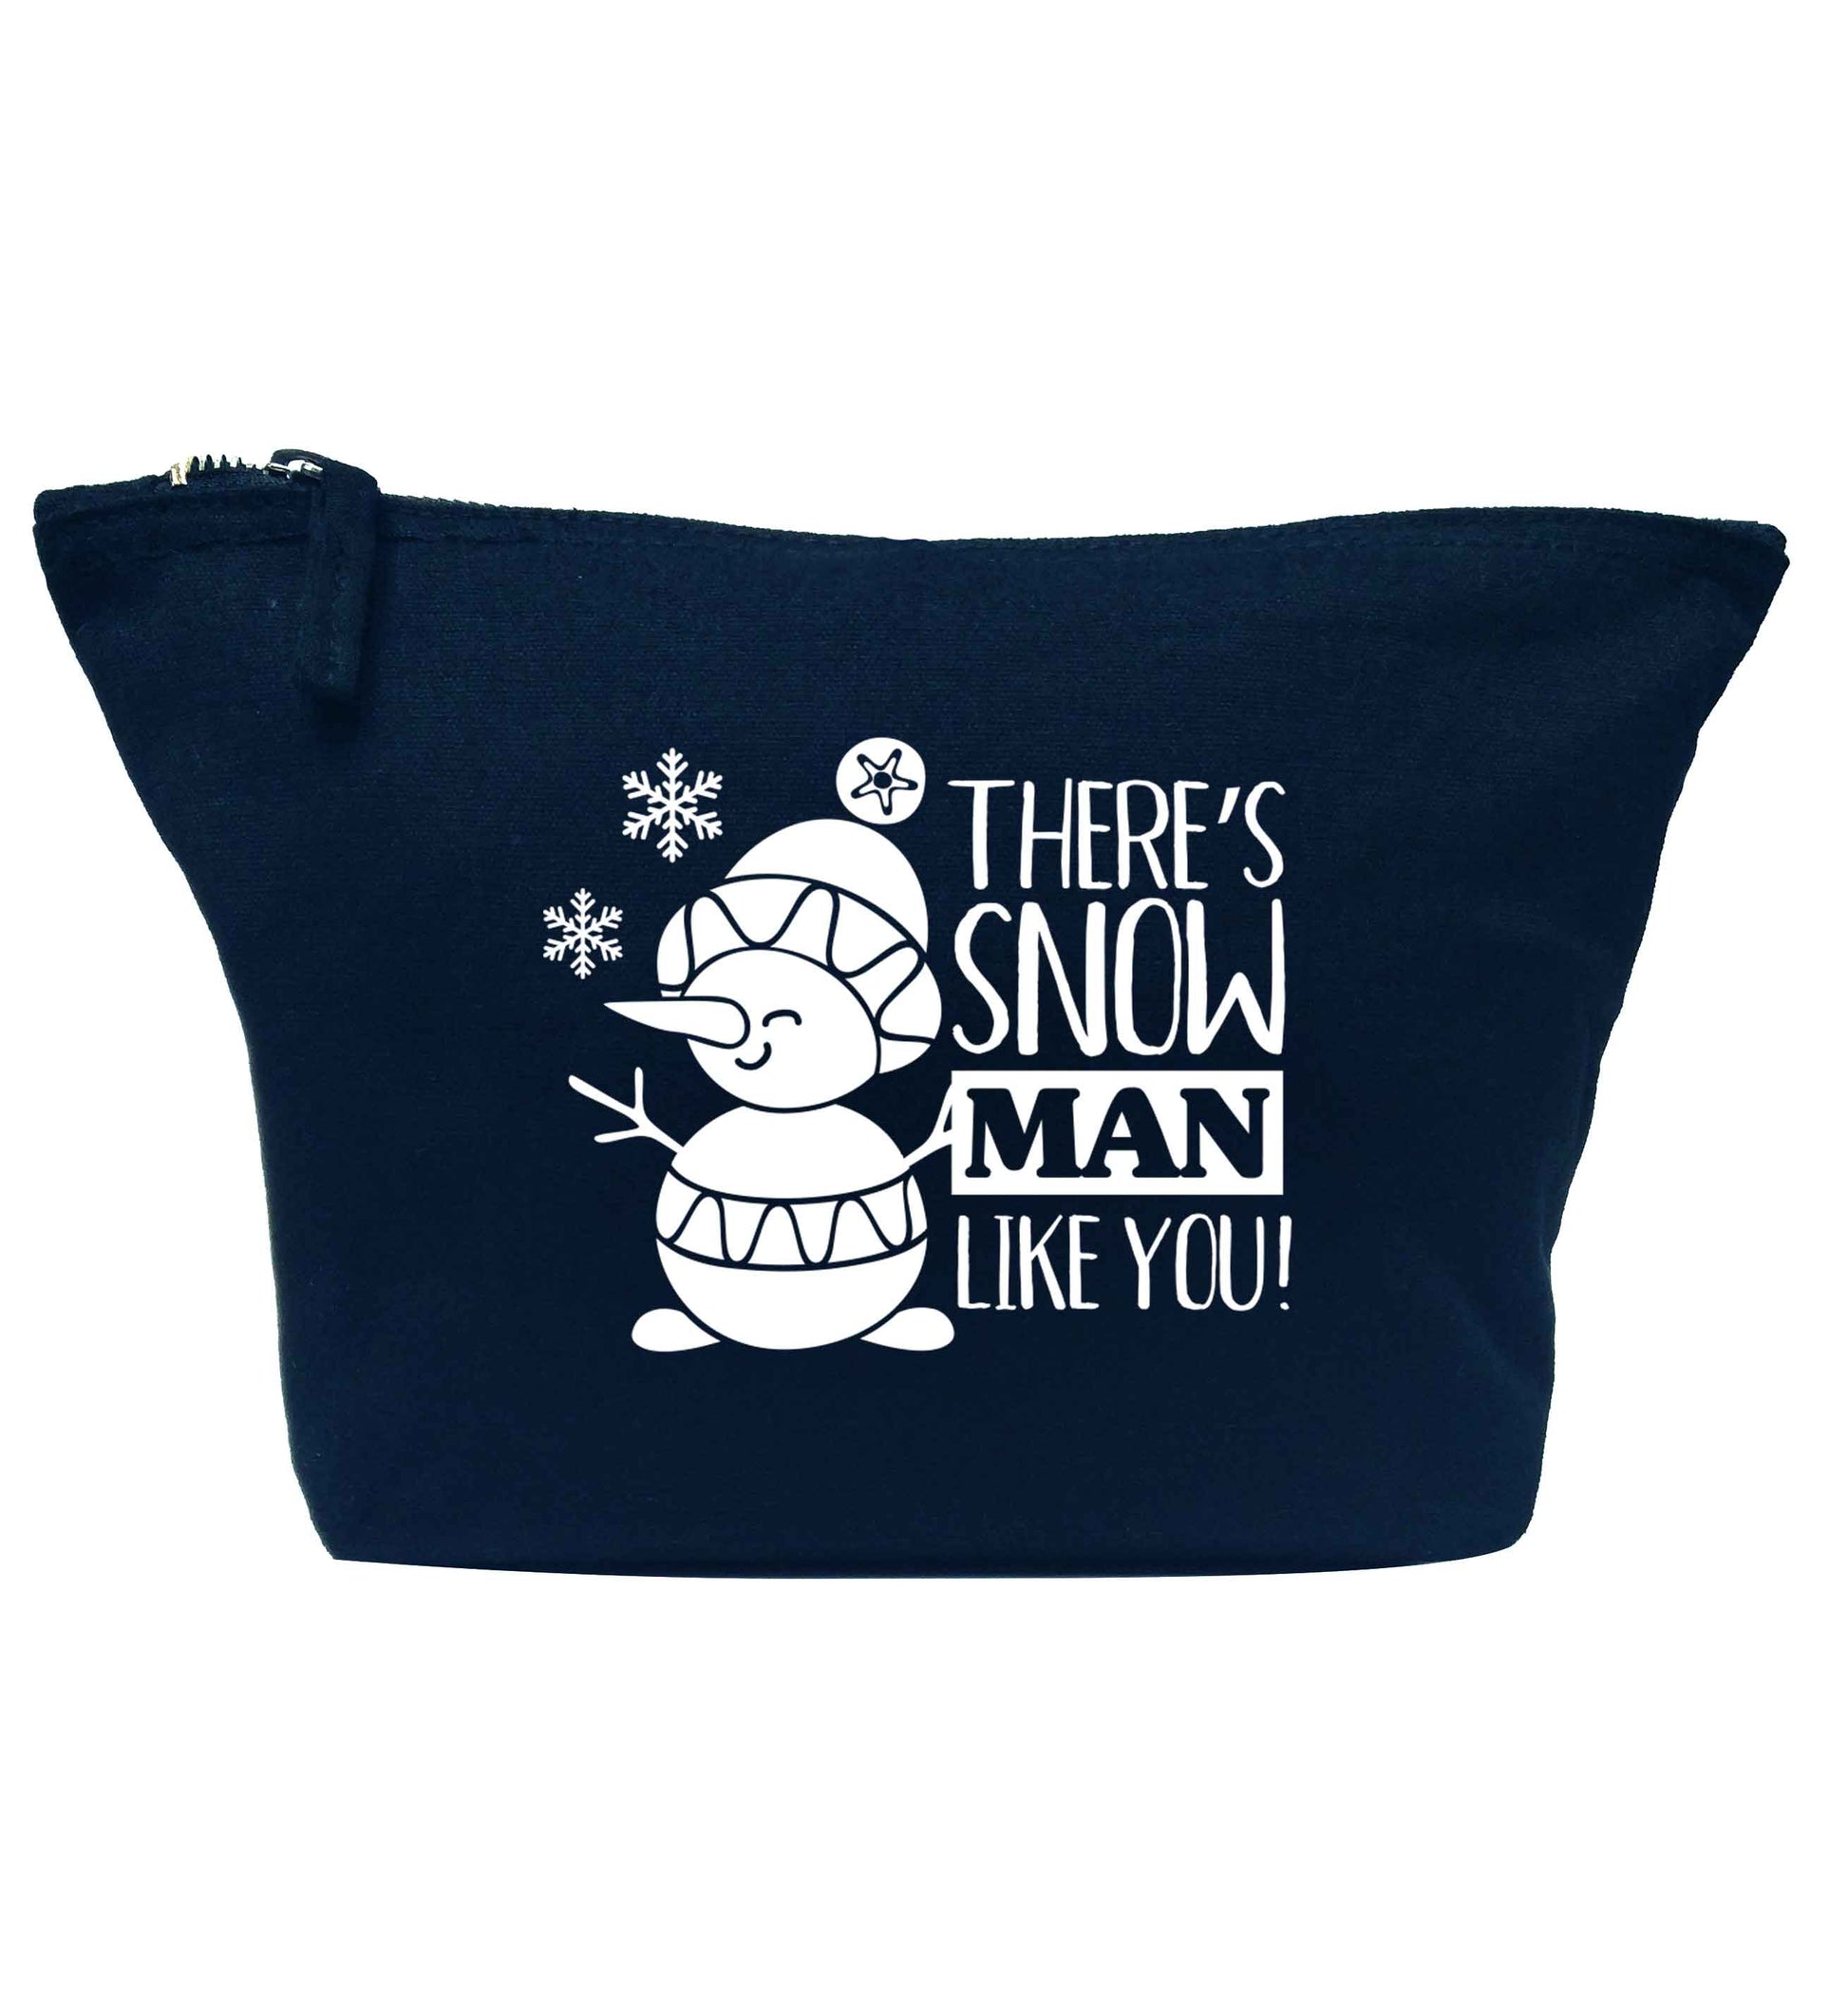 There's snow man like you navy makeup bag